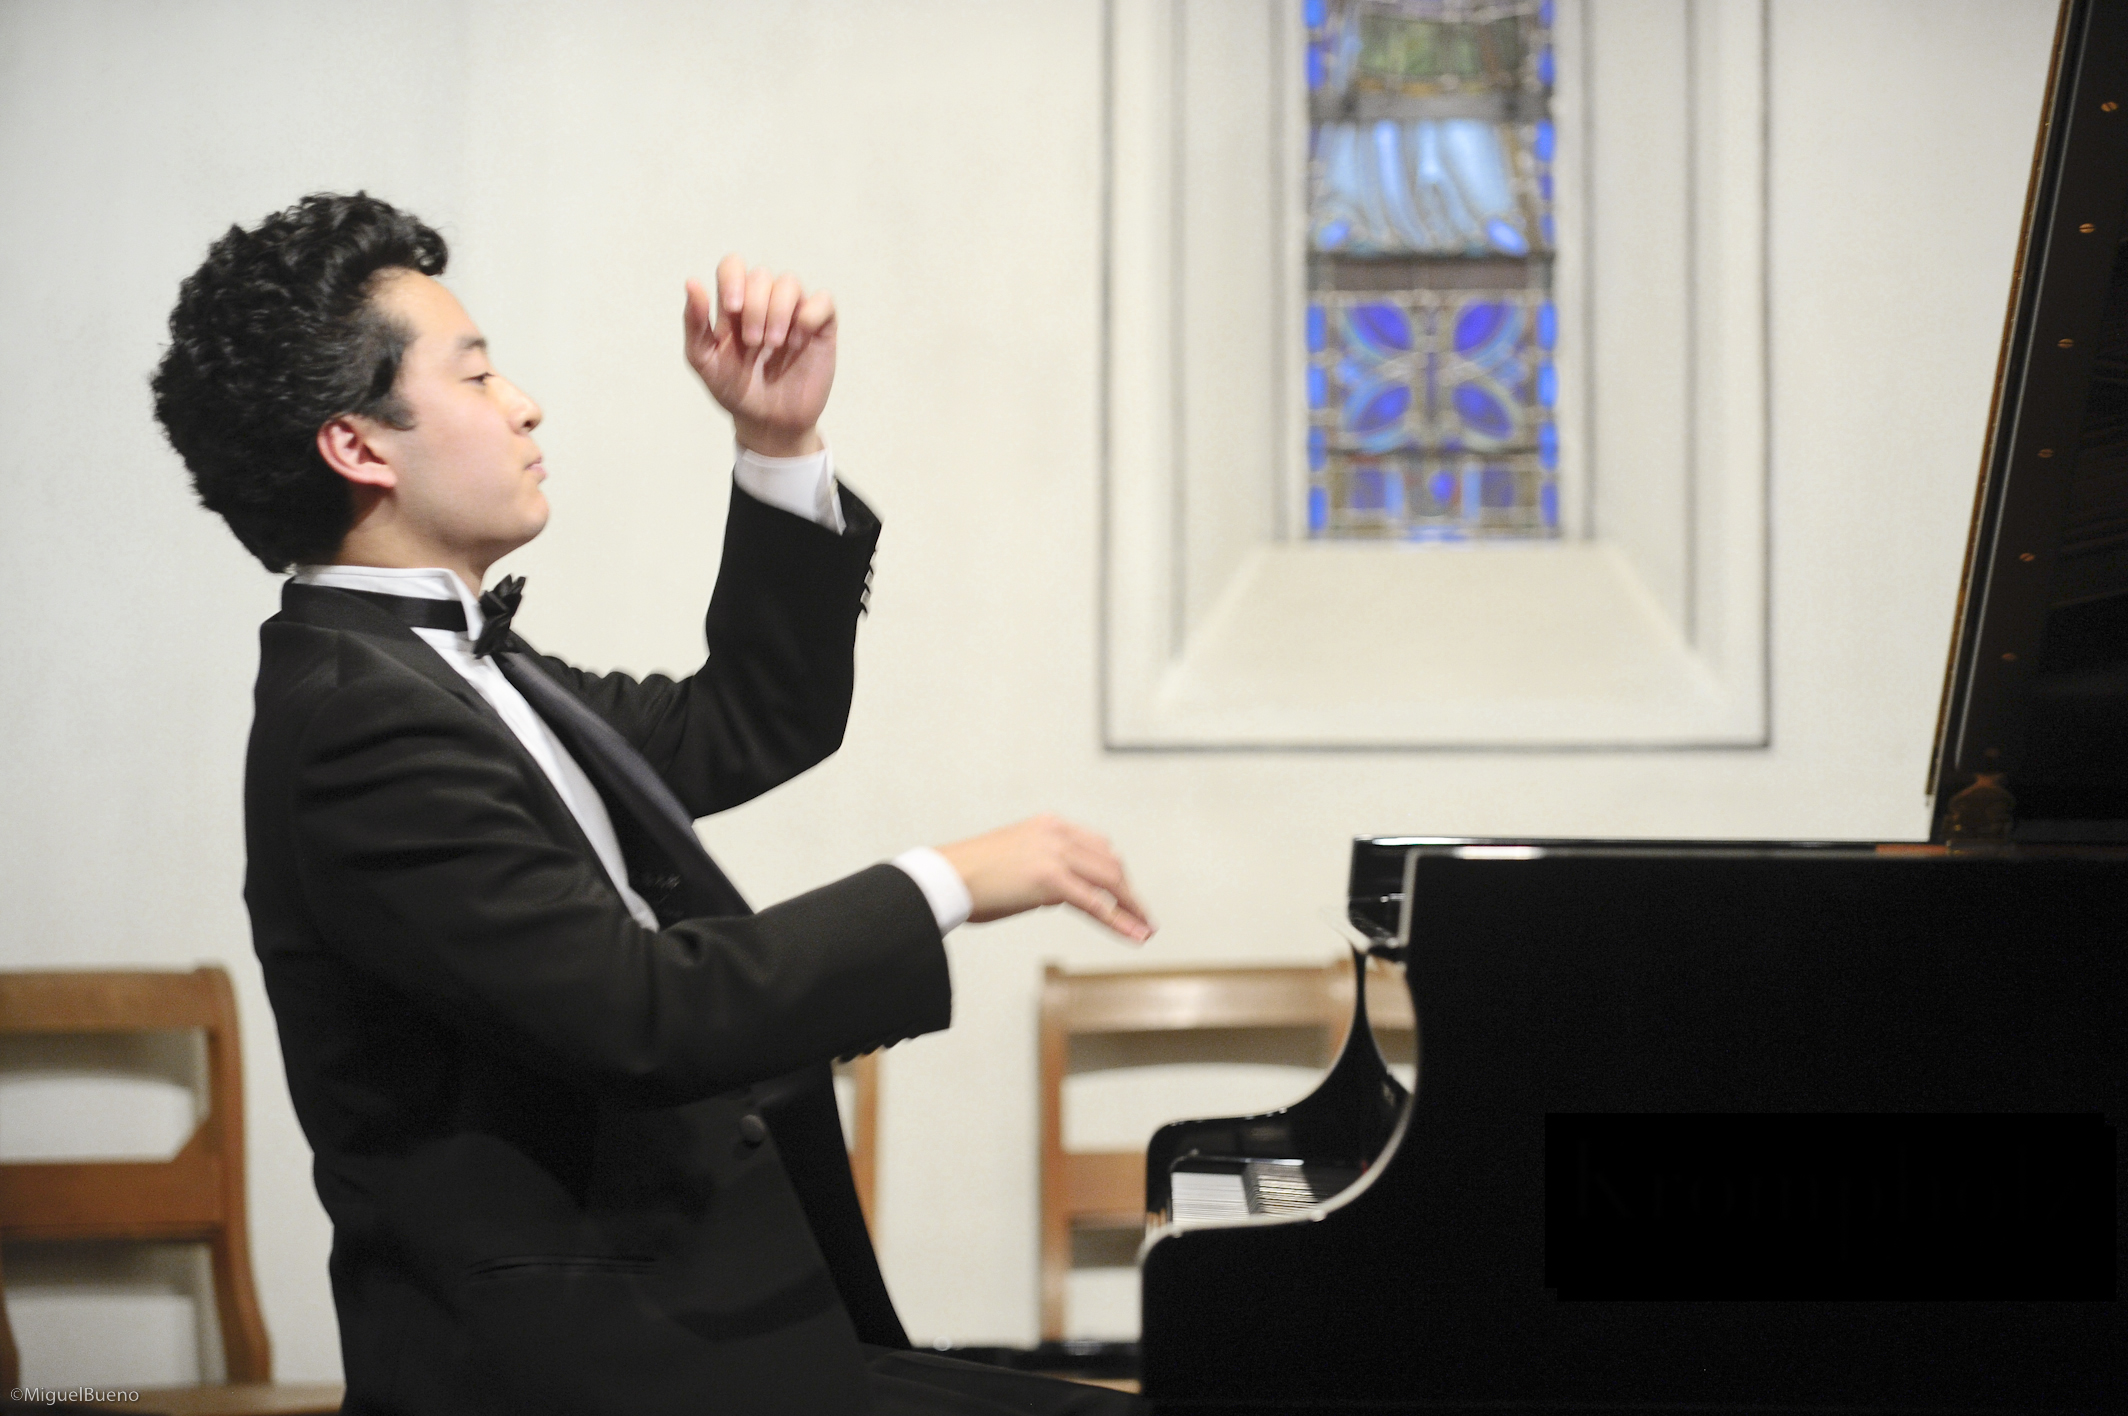 Concierto XXI Concurso Internacional de Piano José Iturbi con Ryutaro Suzuki